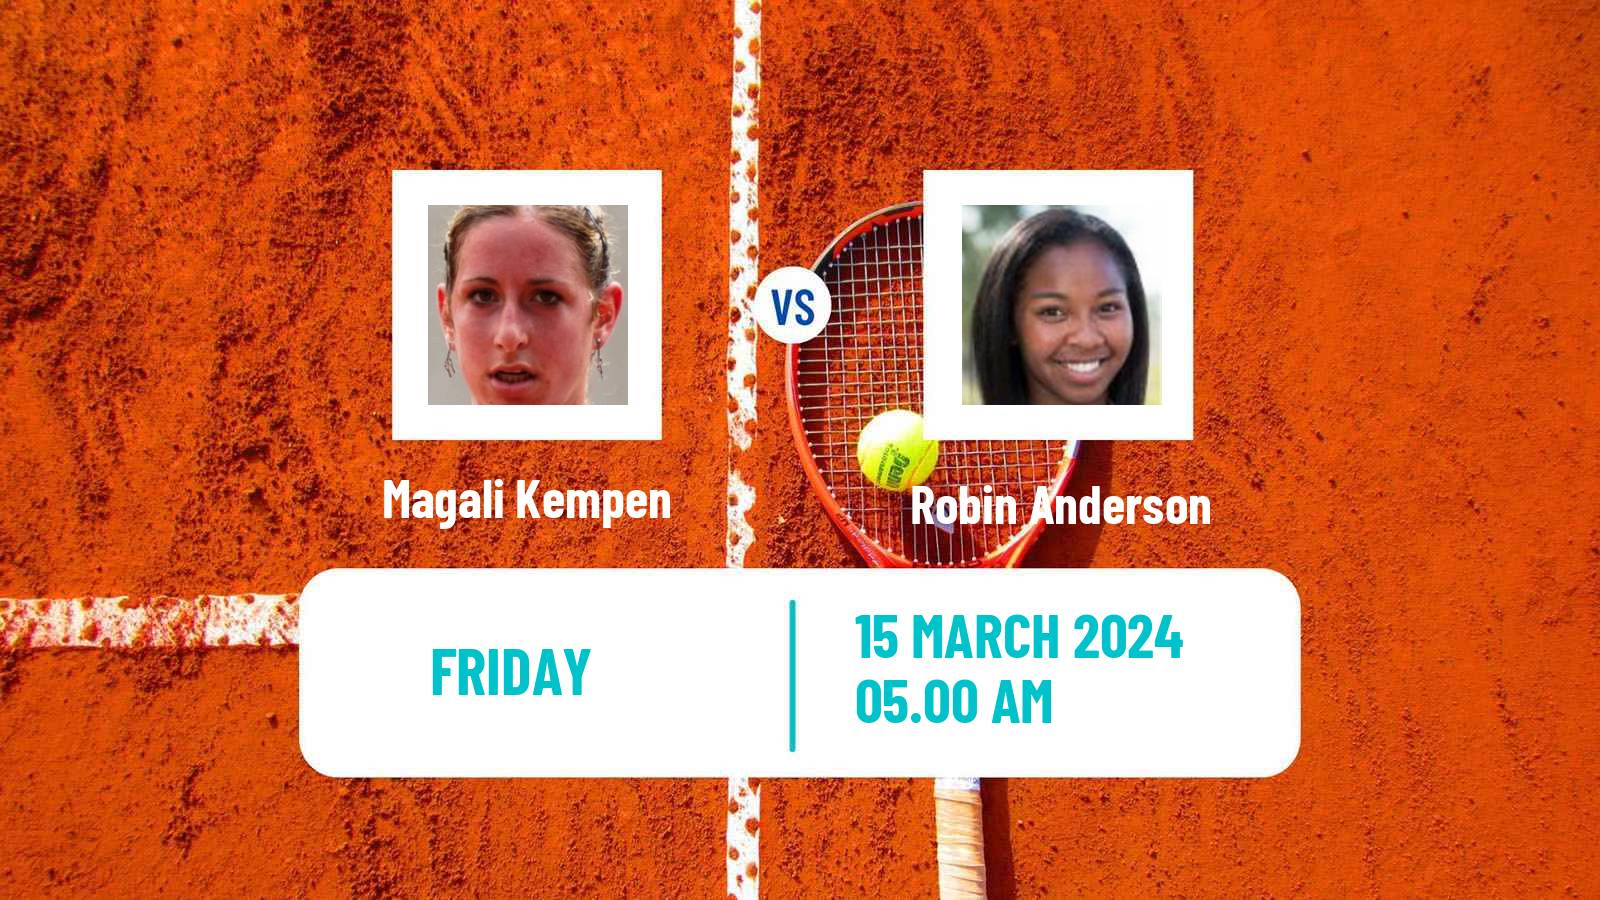 Tennis ITF W35 Solarino 2 Women Magali Kempen - Robin Anderson